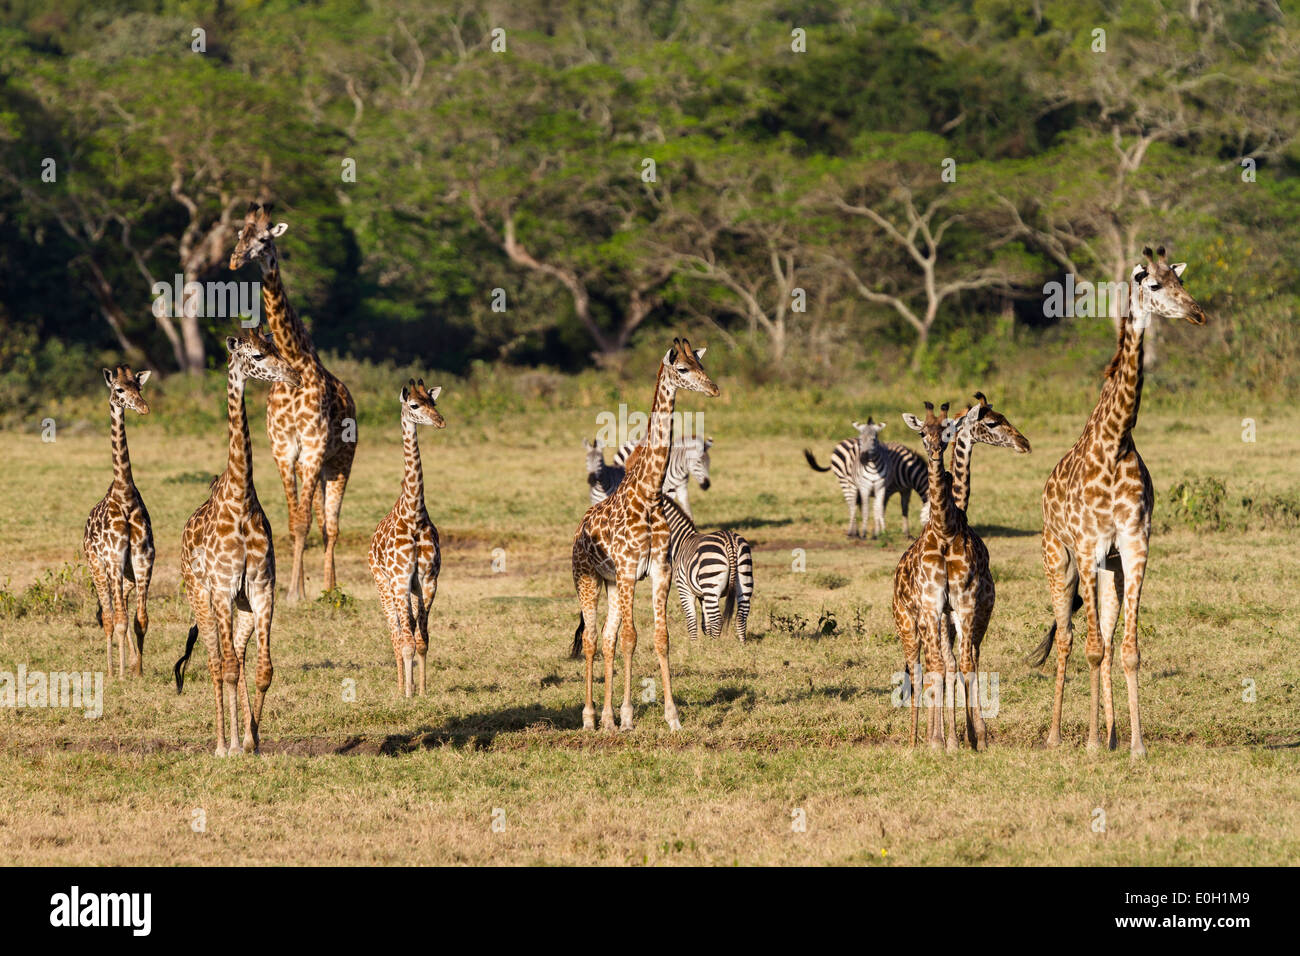 Massai giraffe, Giraffa camelopardalis e zebre, Equus quagga, poco Serengeti, Parco Nazionale di Arusha, Tanzania Africa Orientale, Foto Stock